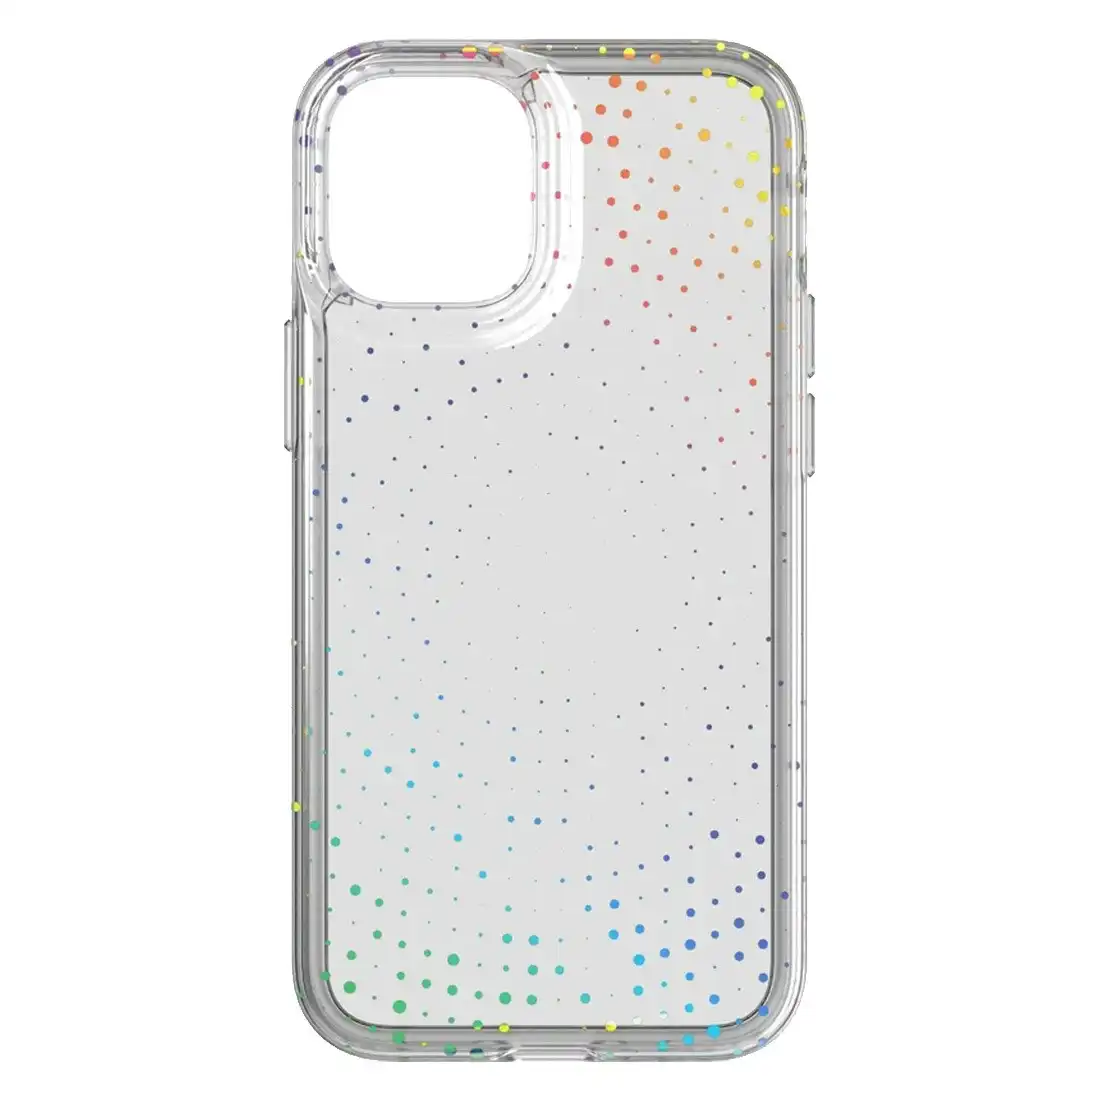 Tech21 Evo Sparkle Case for iPhone 12 mini T21-8622 - Clear